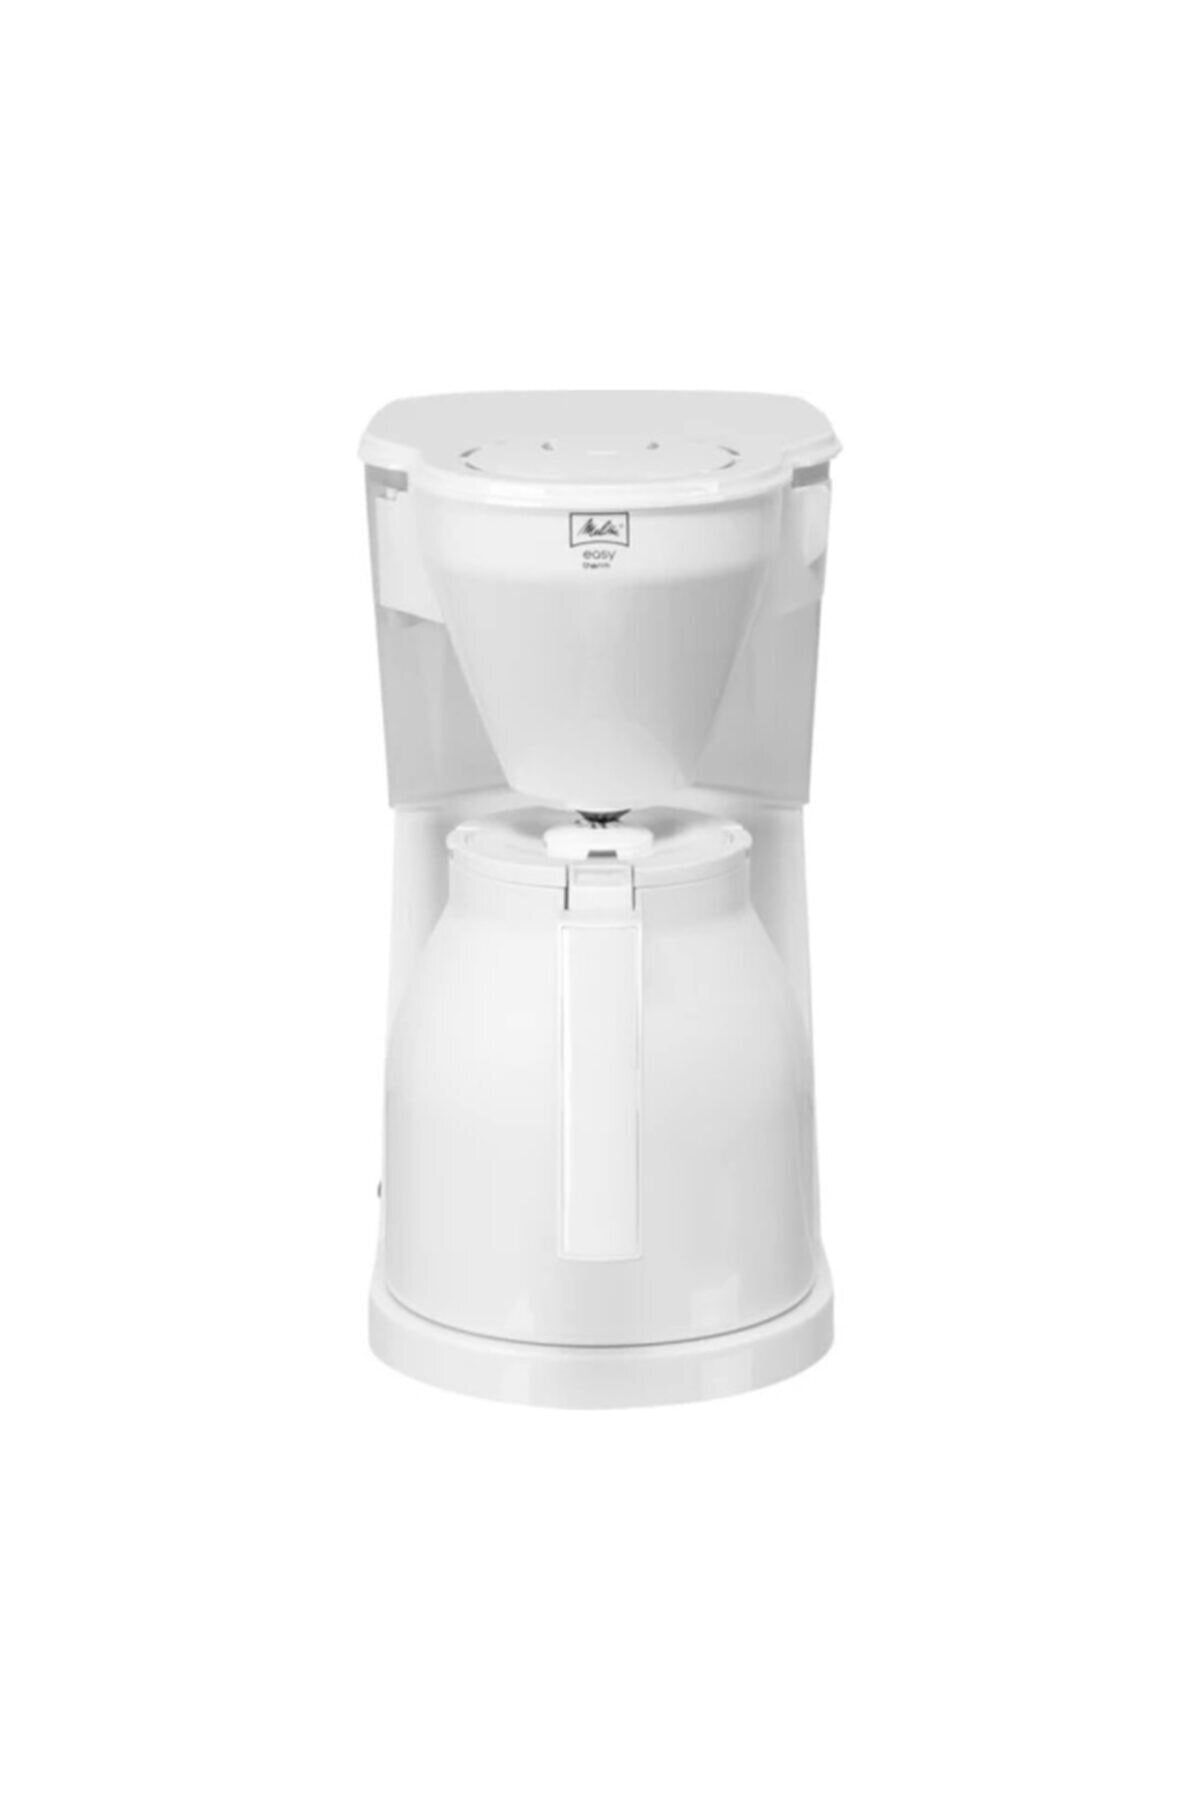 melitta Easy Therm (termoslu) Filtre Kahve Makinesi (beyaz)